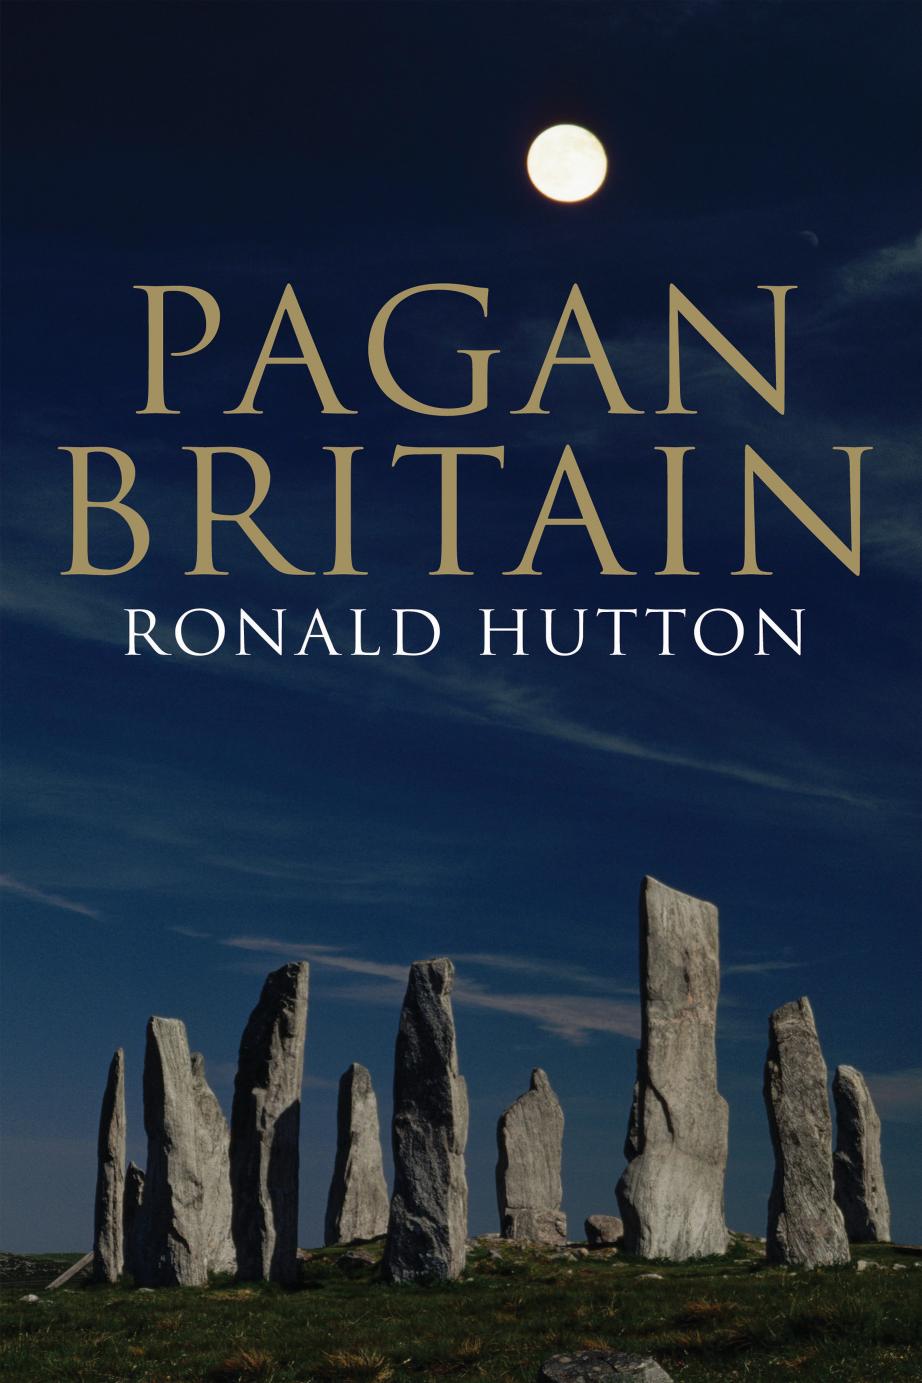 Pagan Britain by Ronald Hutton